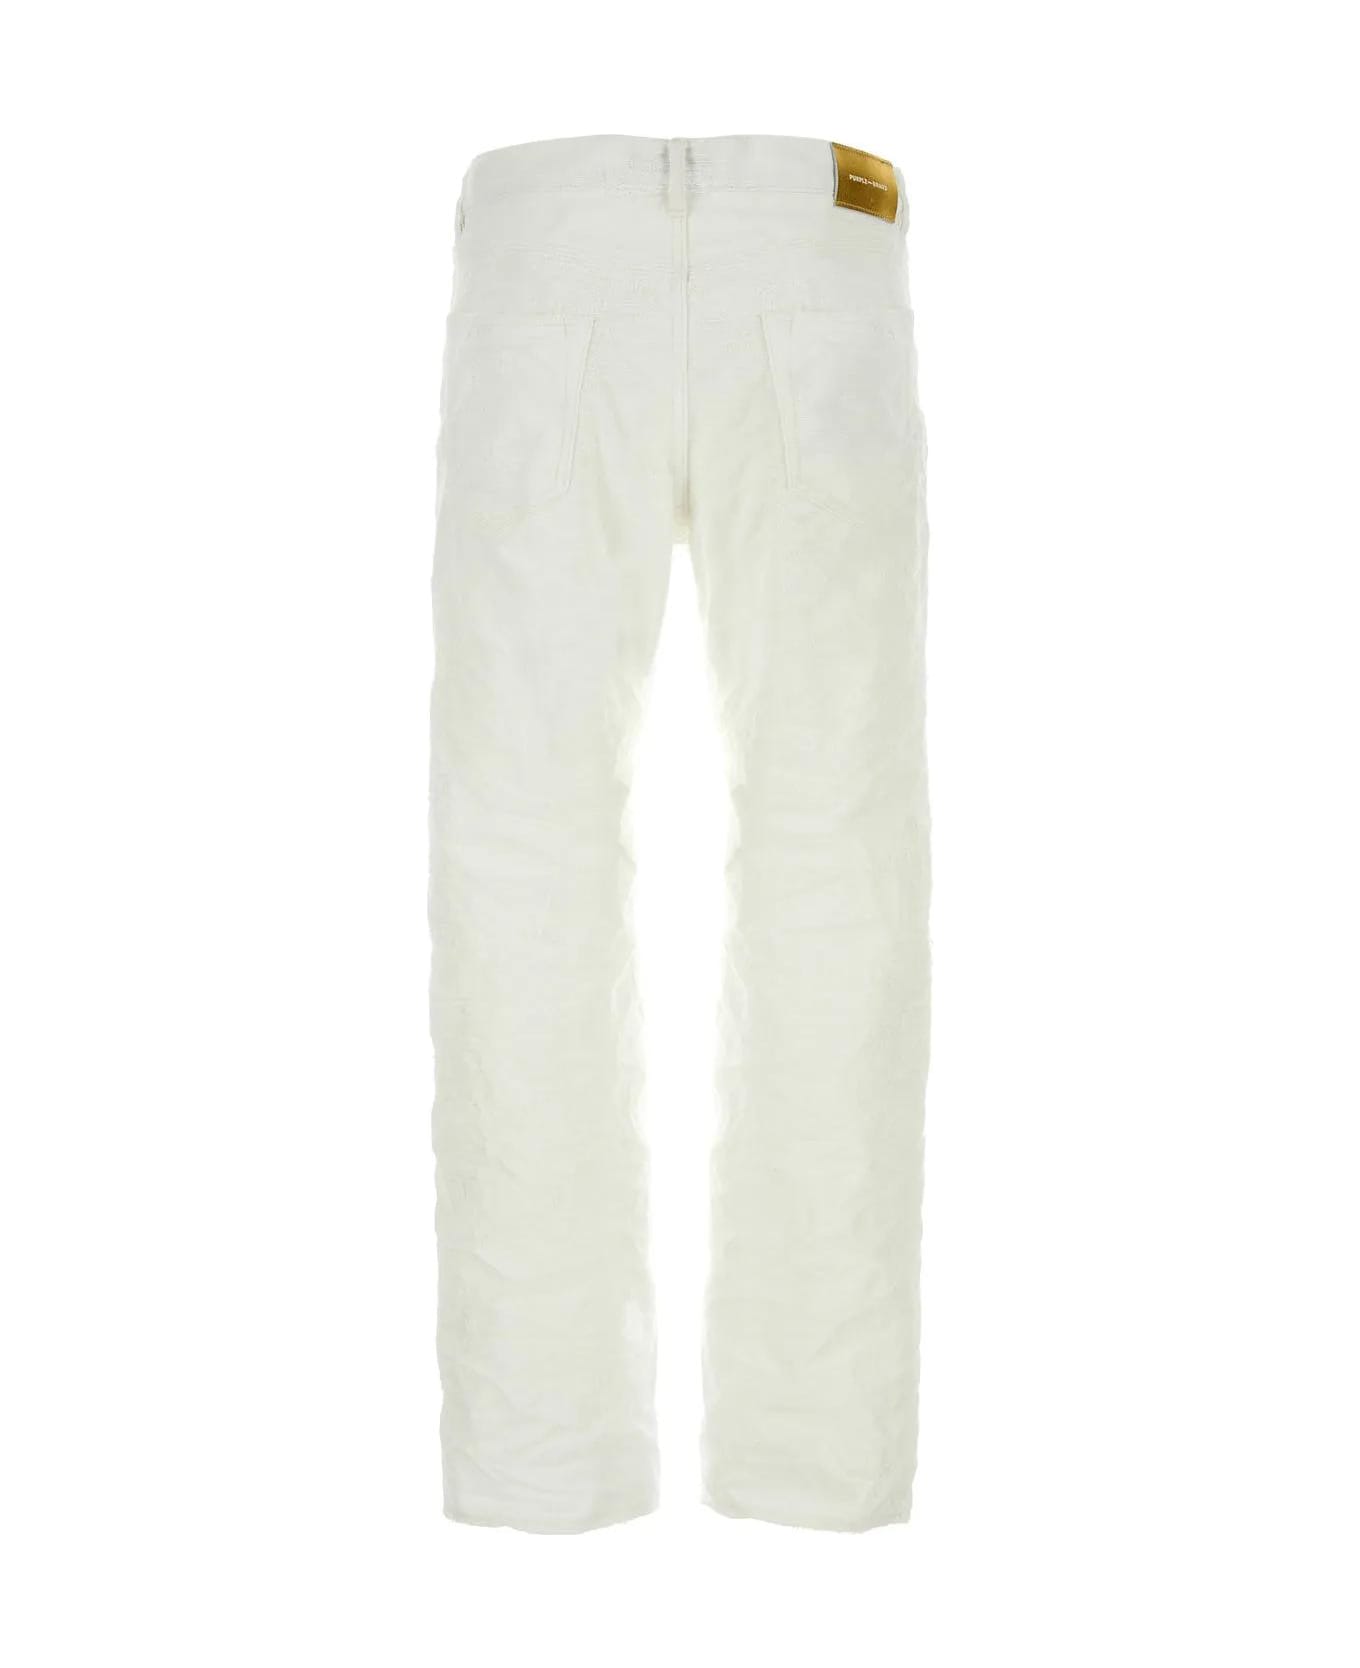 Purple Brand White Denim Jeans - WHITE ボトムス